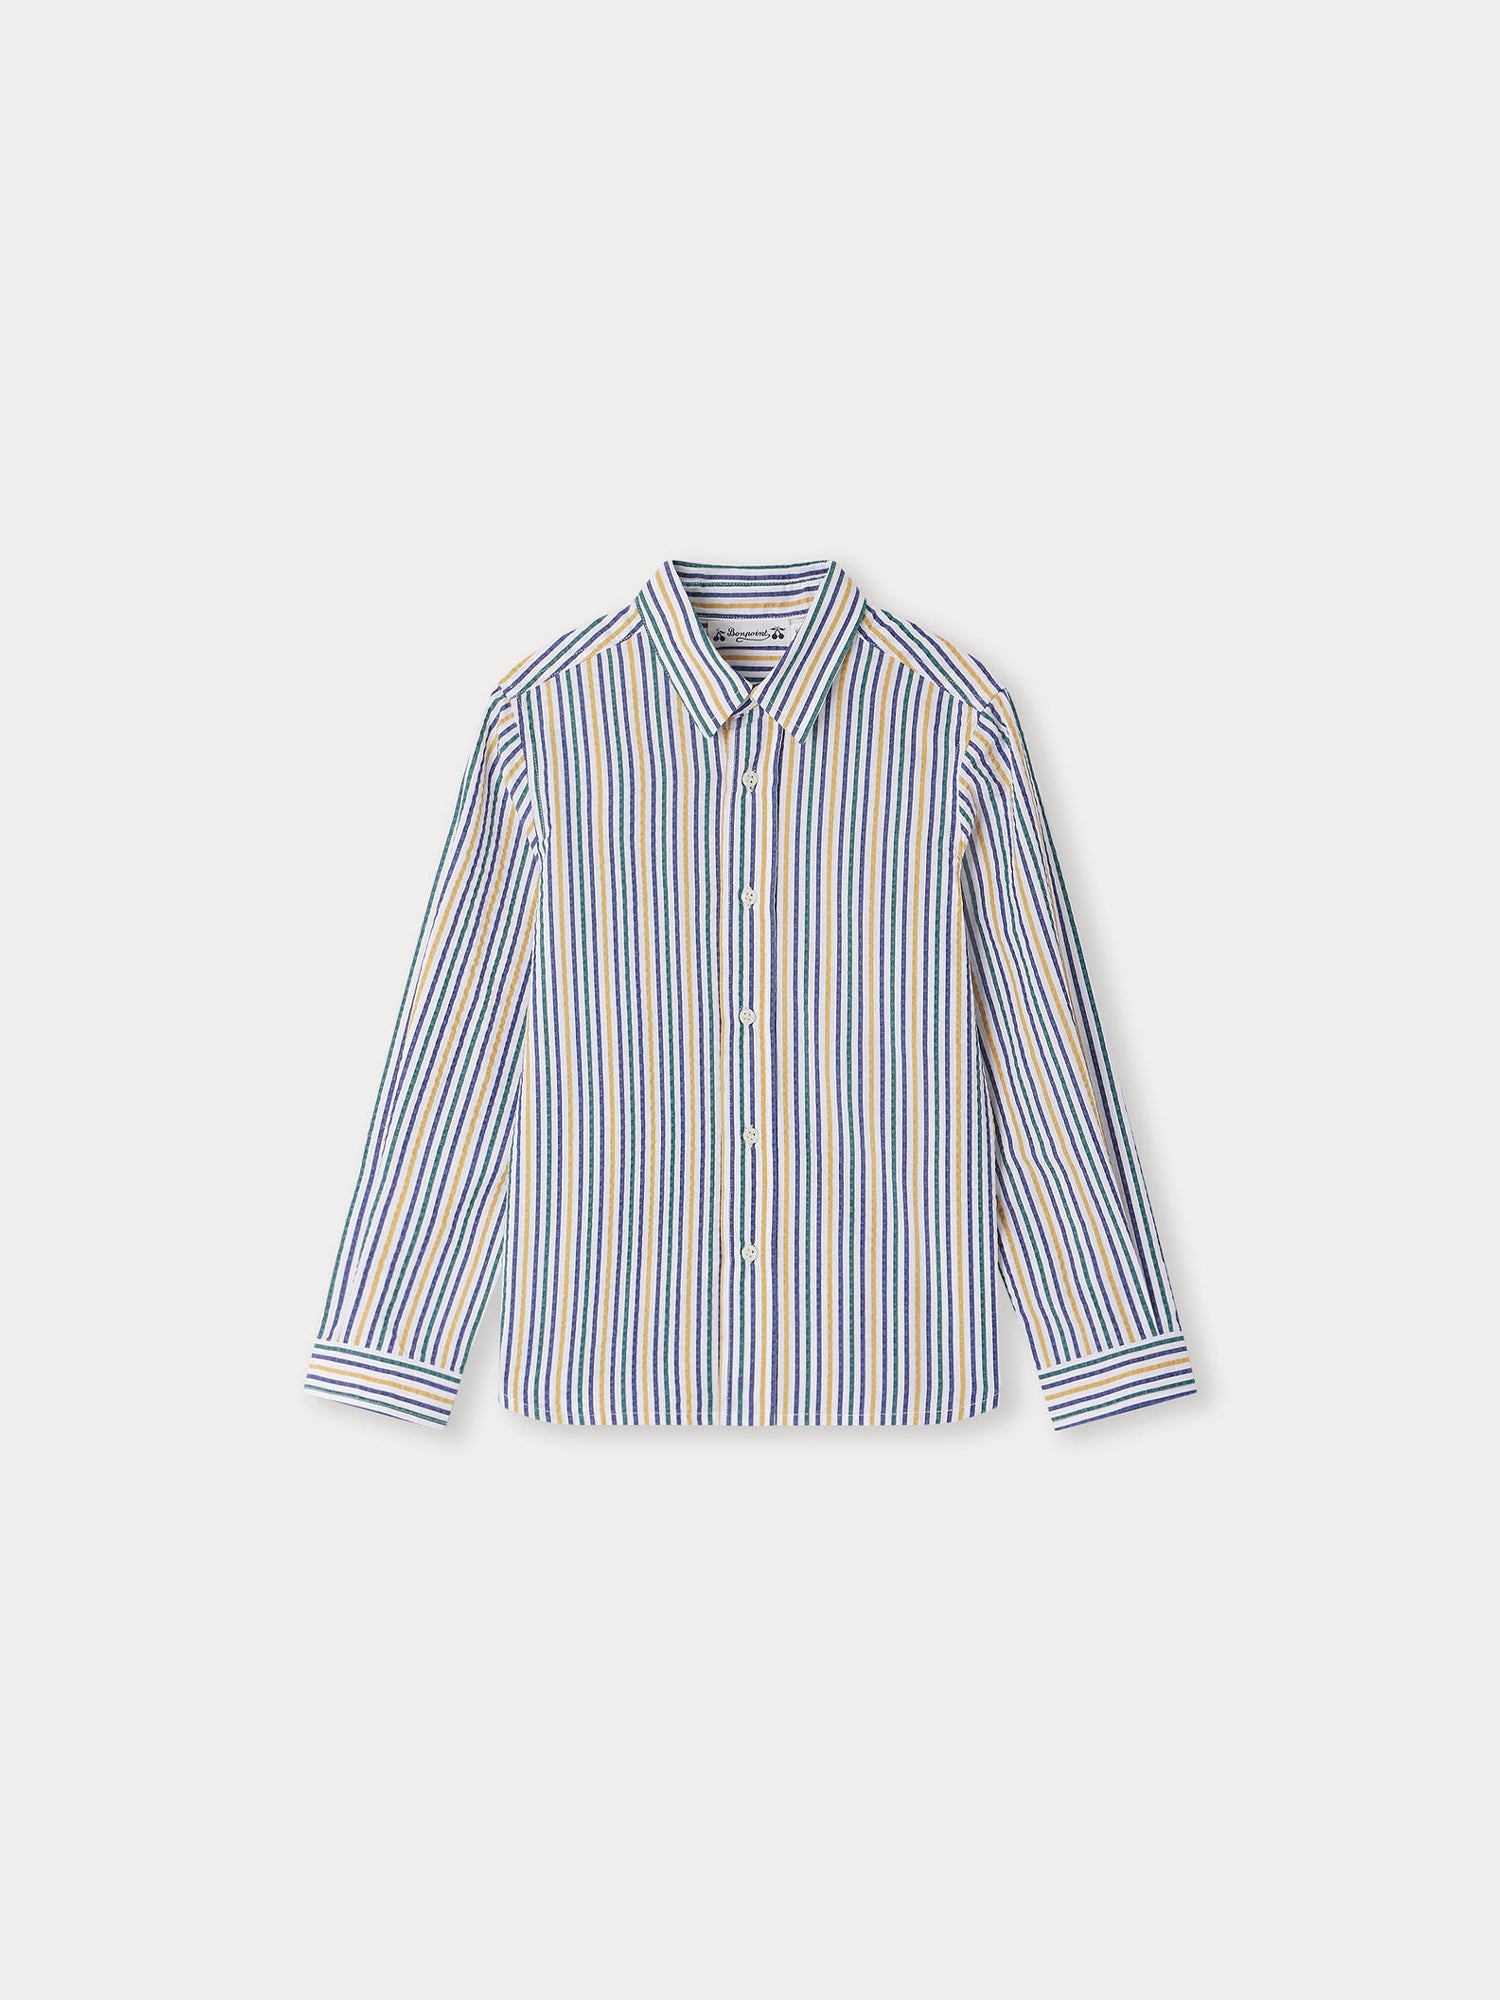 Boys Blue Stripes Cotton Shirt